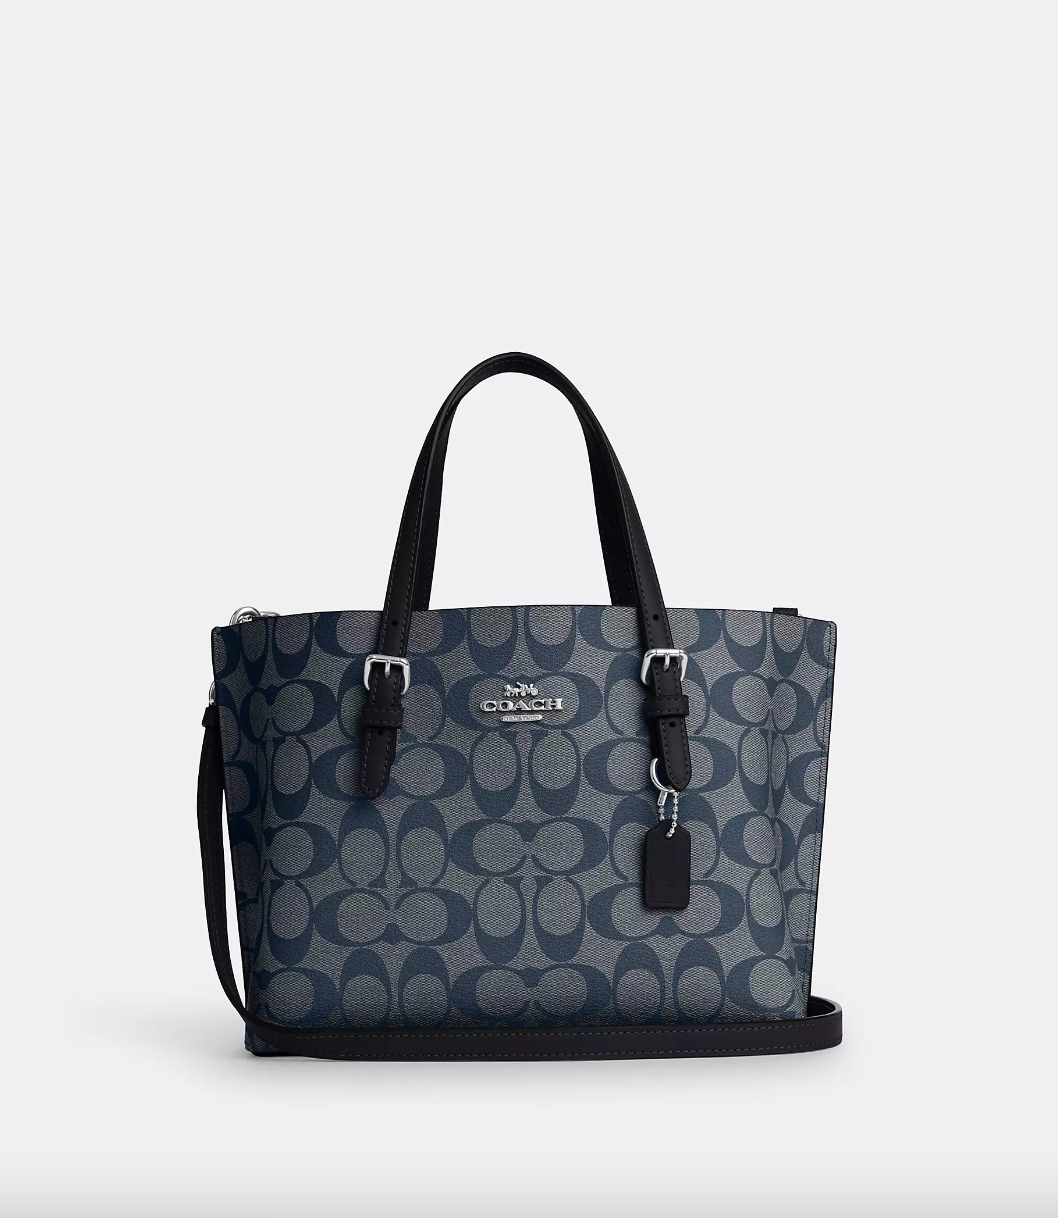 Handbag Designer By Coach Size: Large